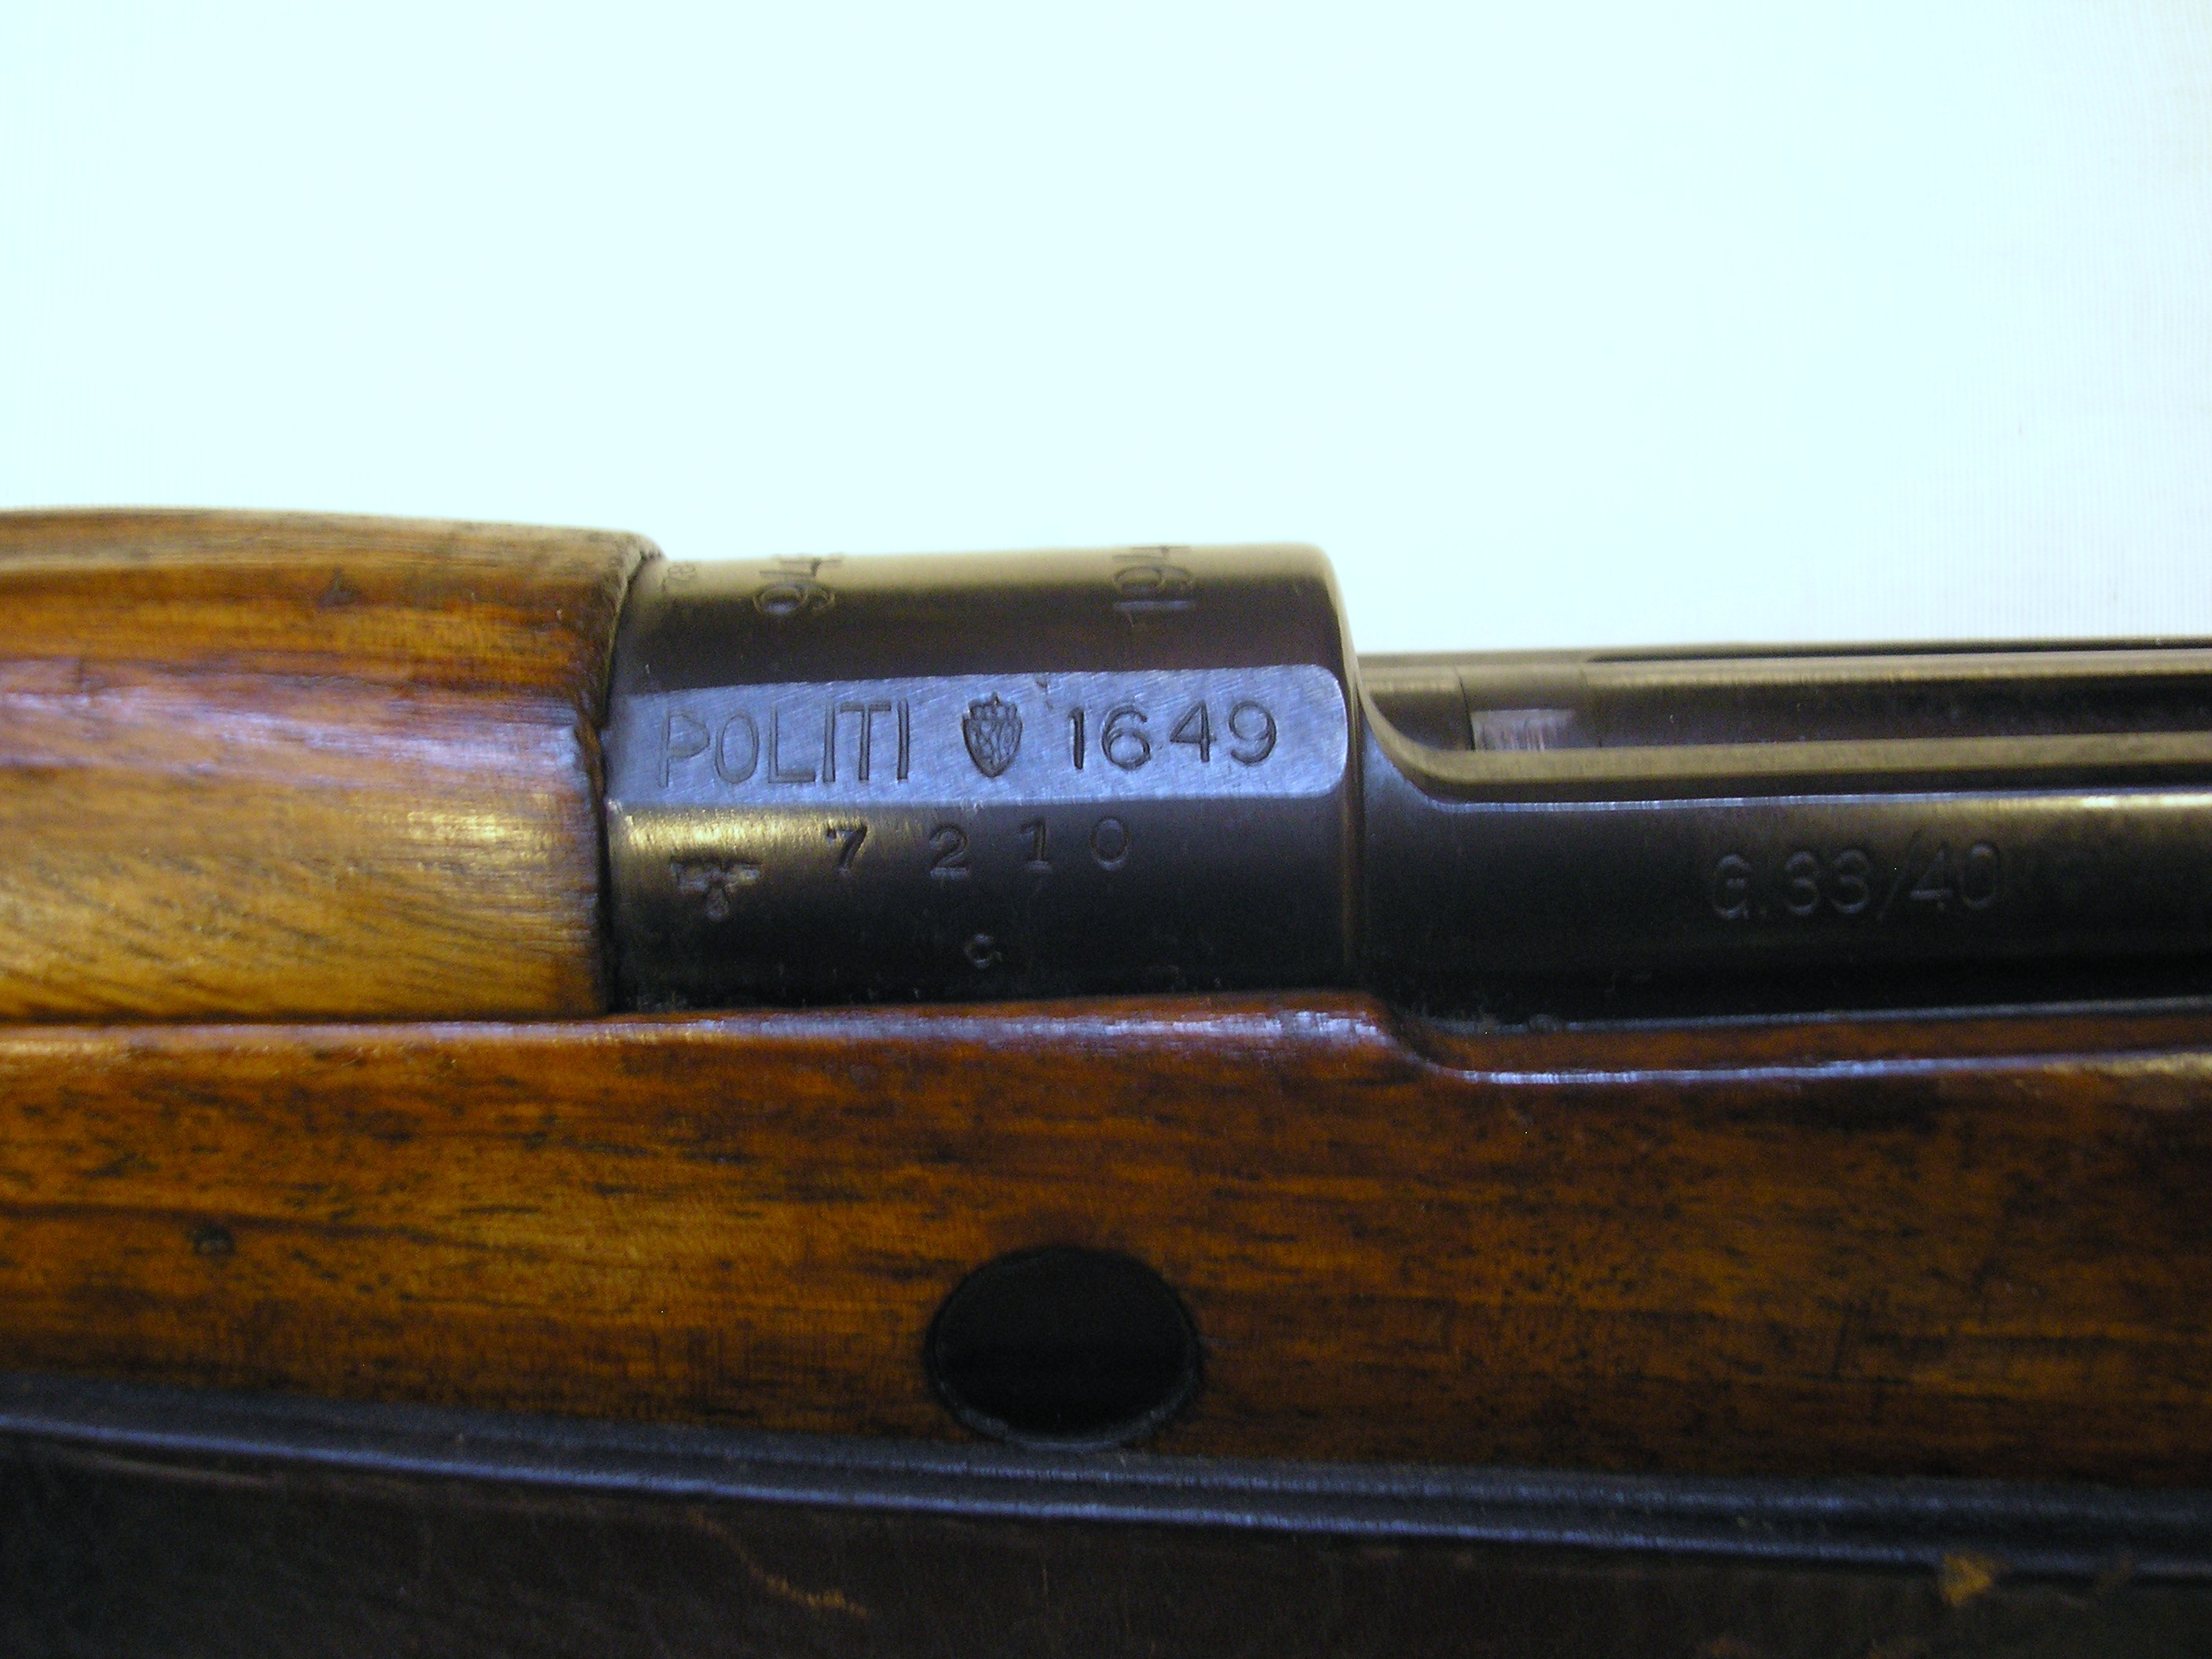 ./guns/rifle/bilder/Rifle-Kongsberg-Mauser-G3340-POLITI-1649-6.JPG